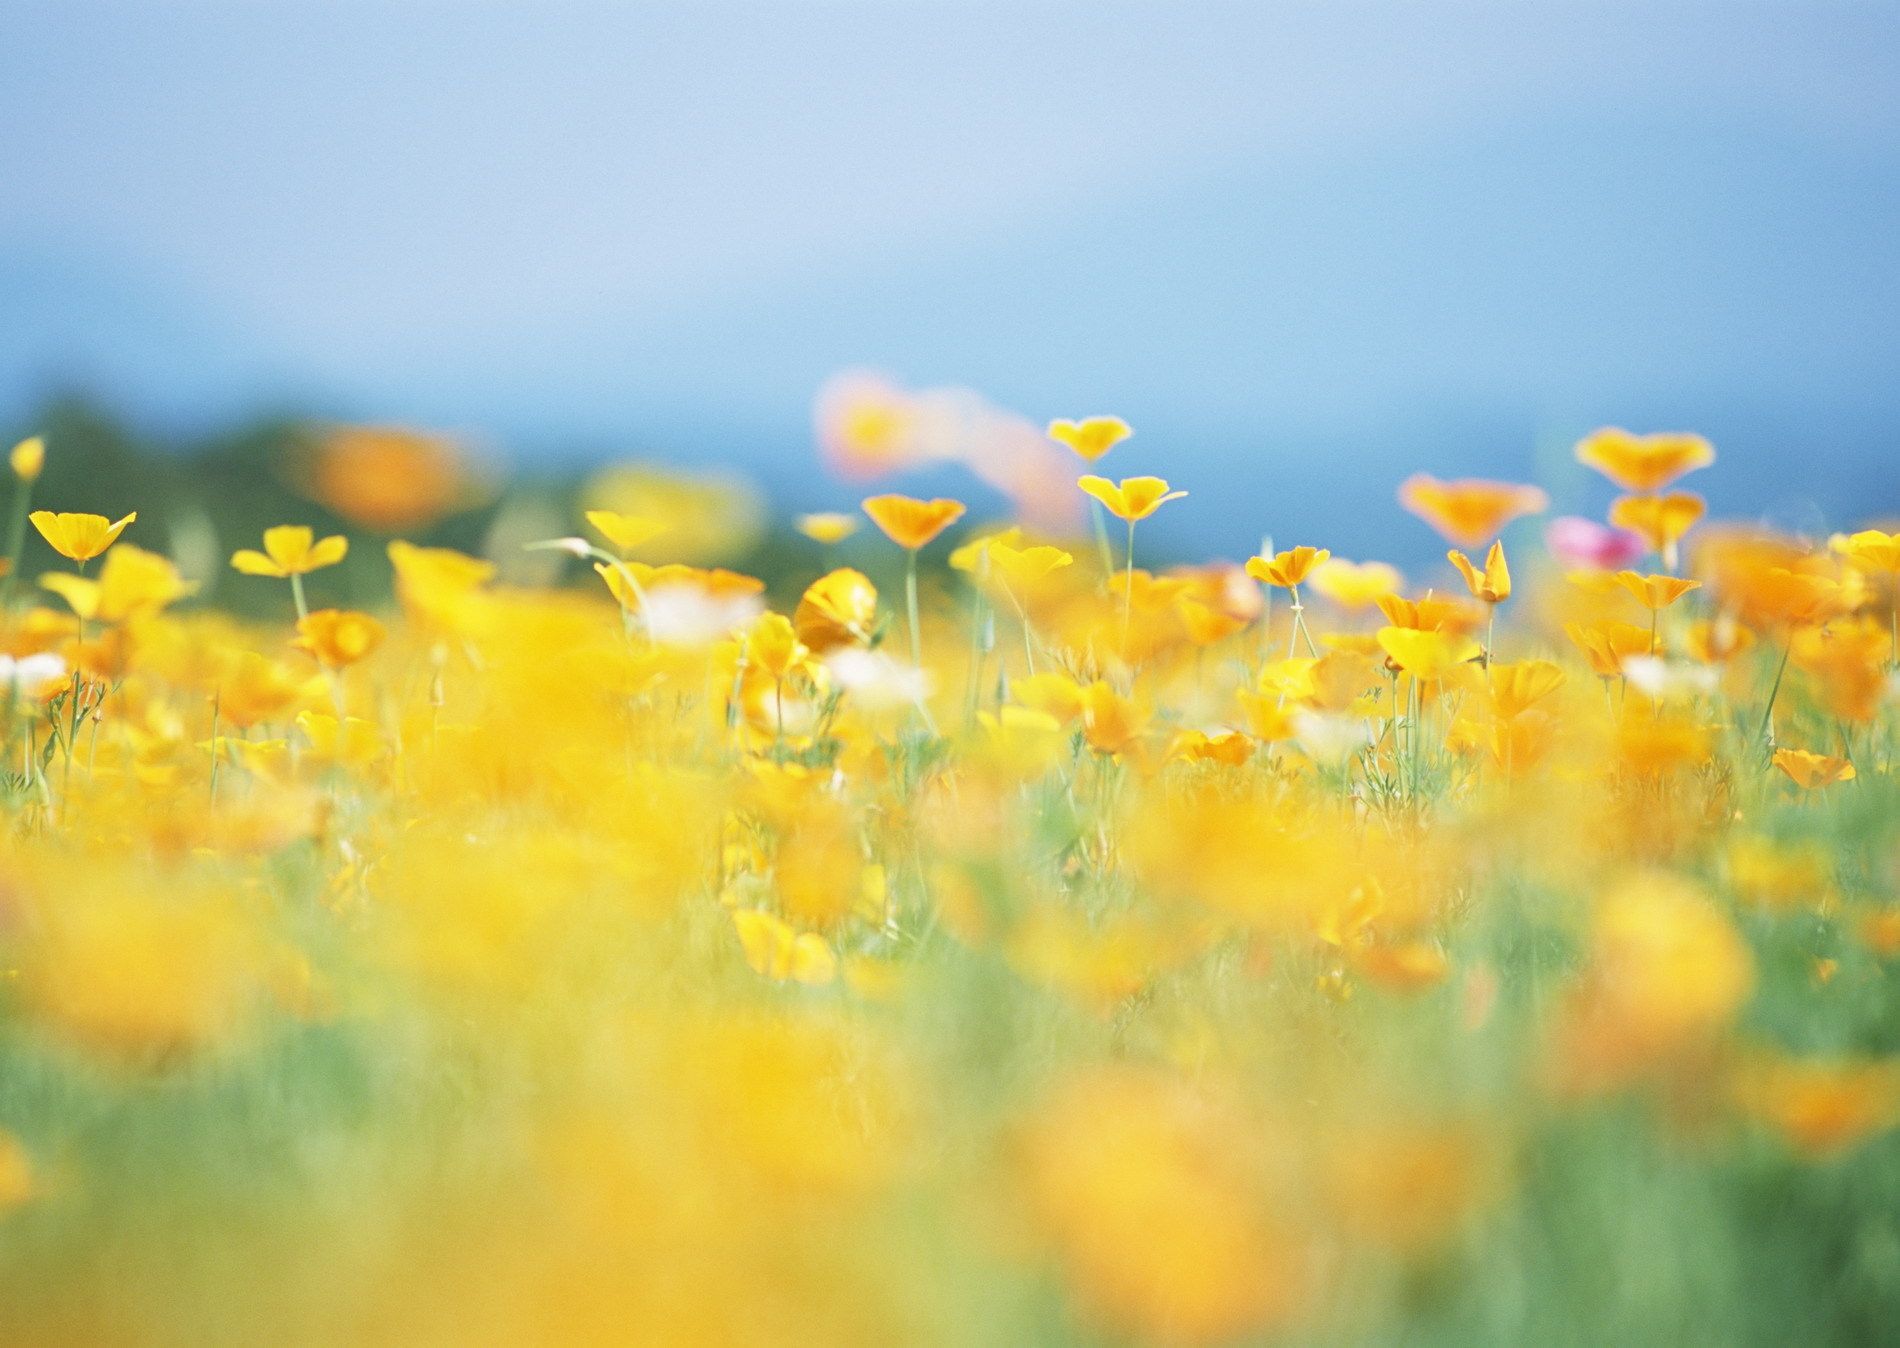 Flowers, yellow, meadow, summer, sun, nature, blurring